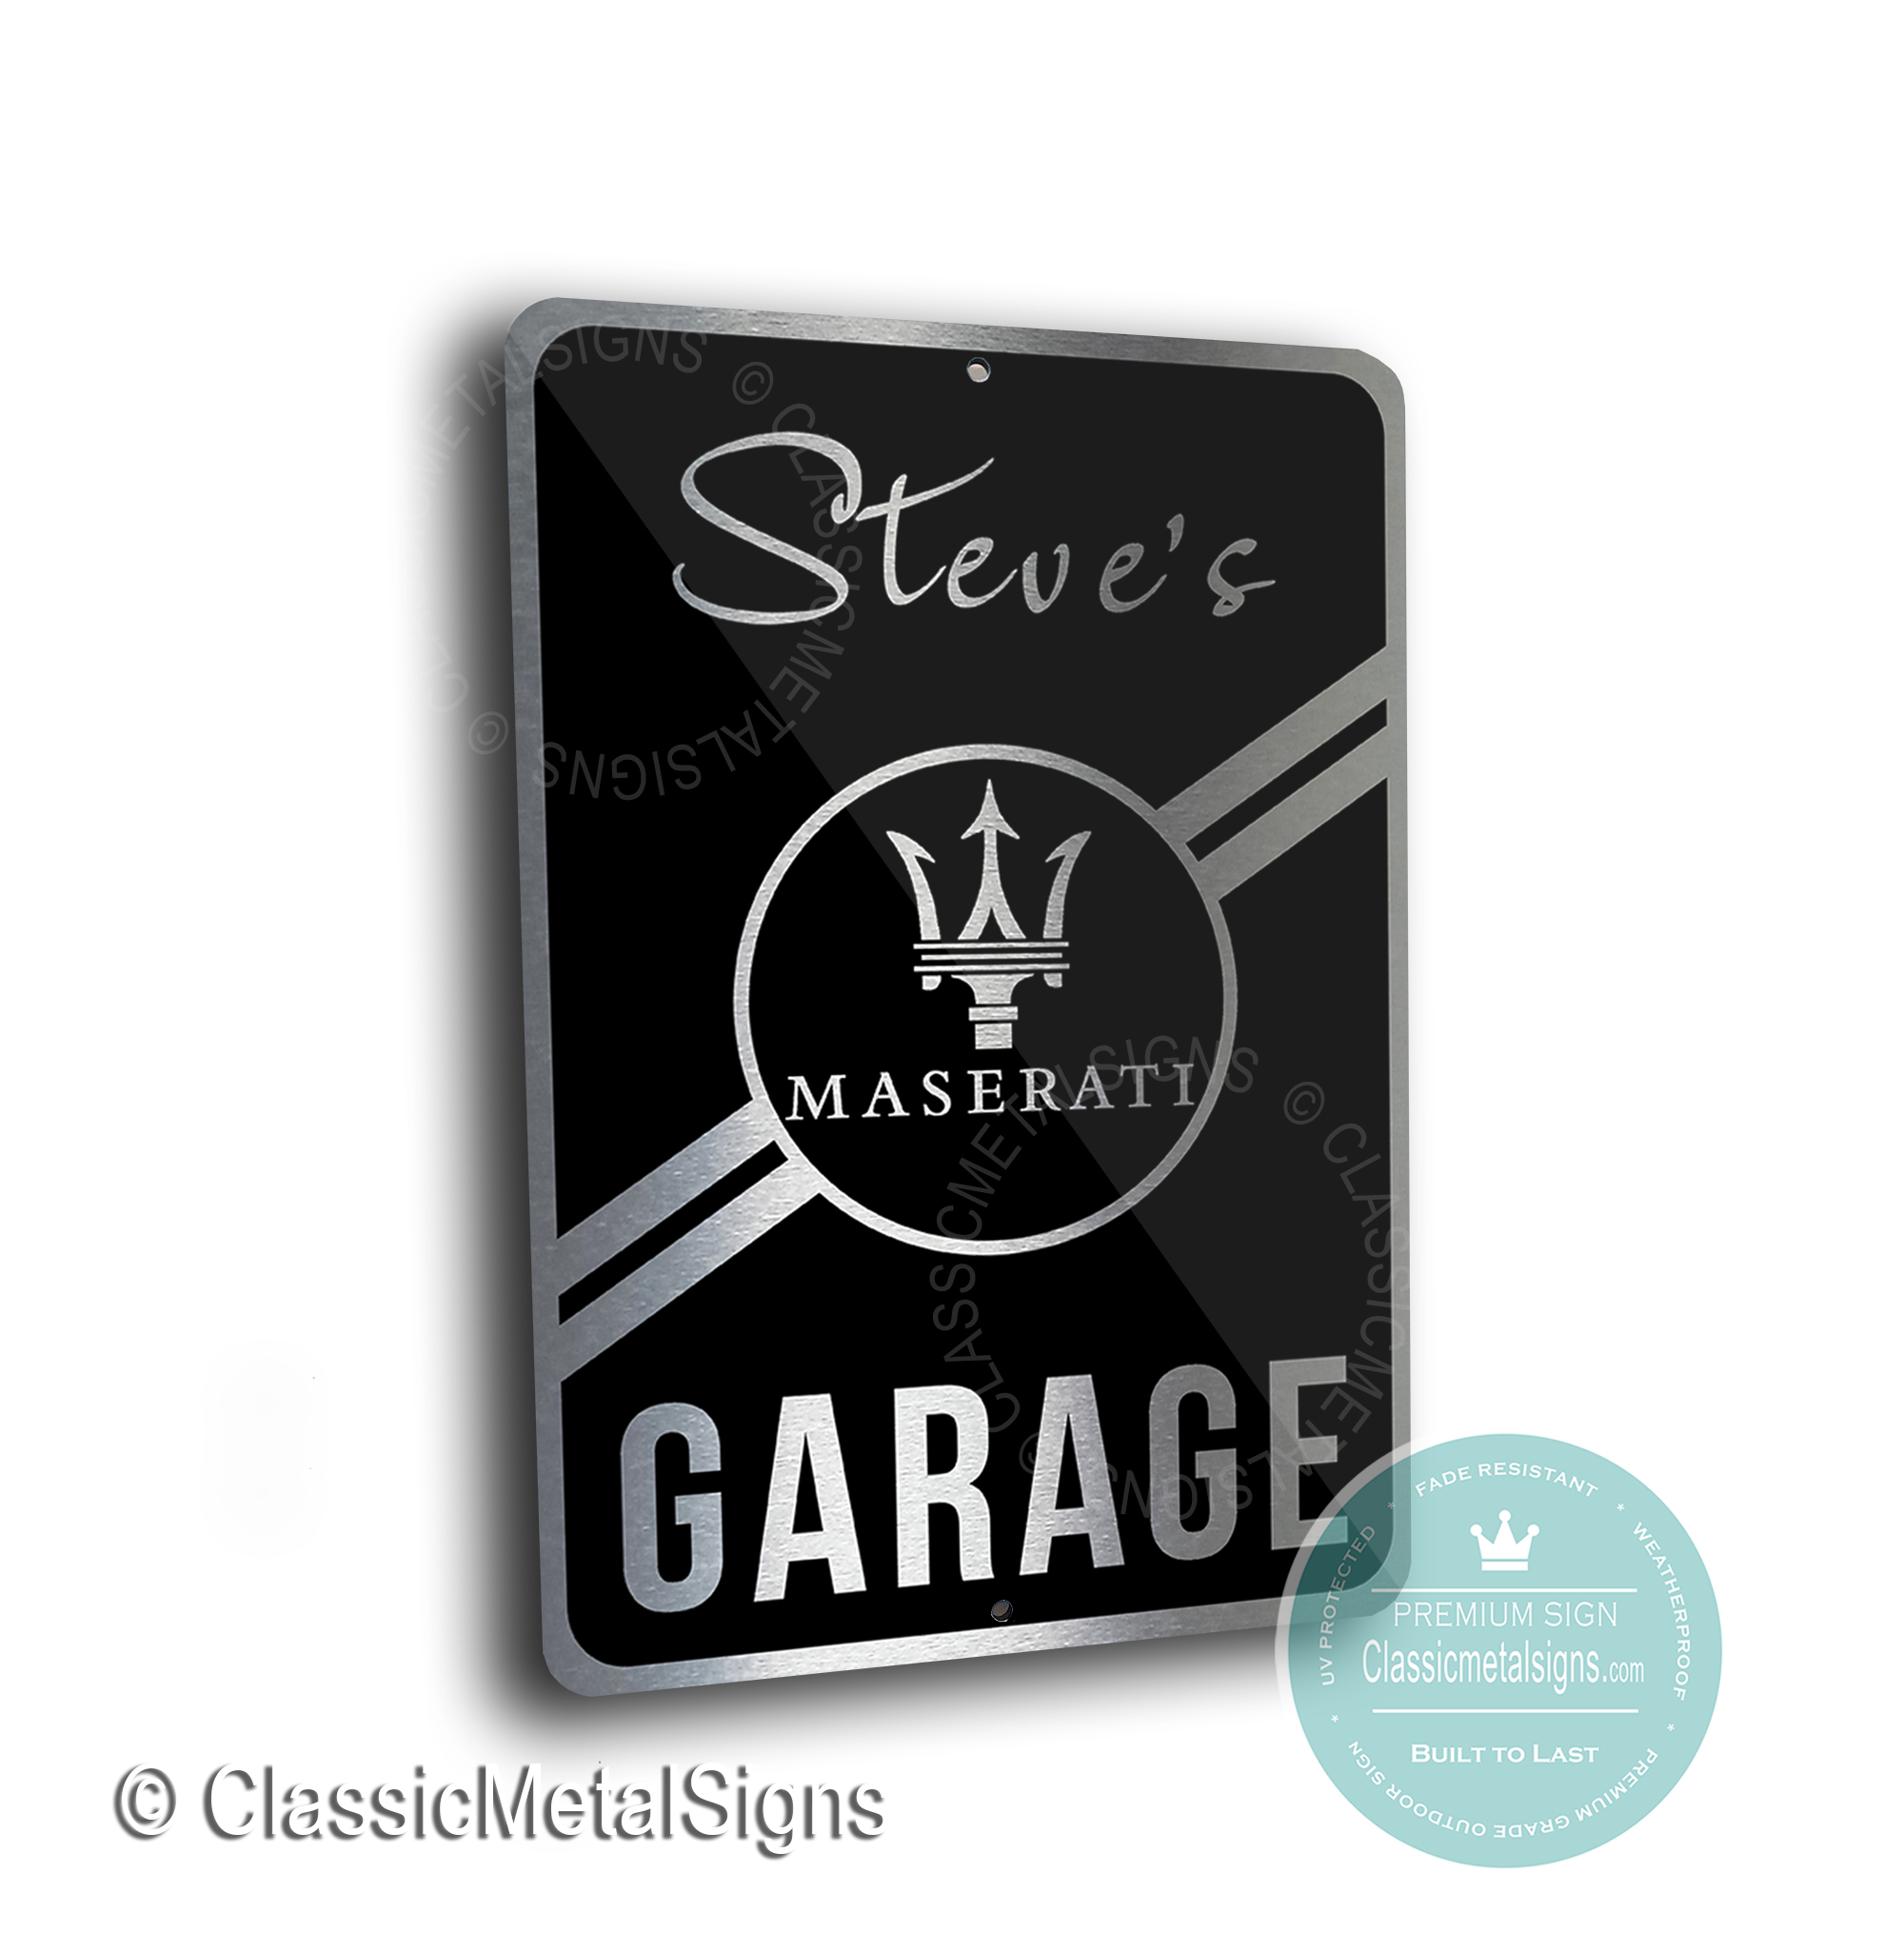 Maserati Garage Signs